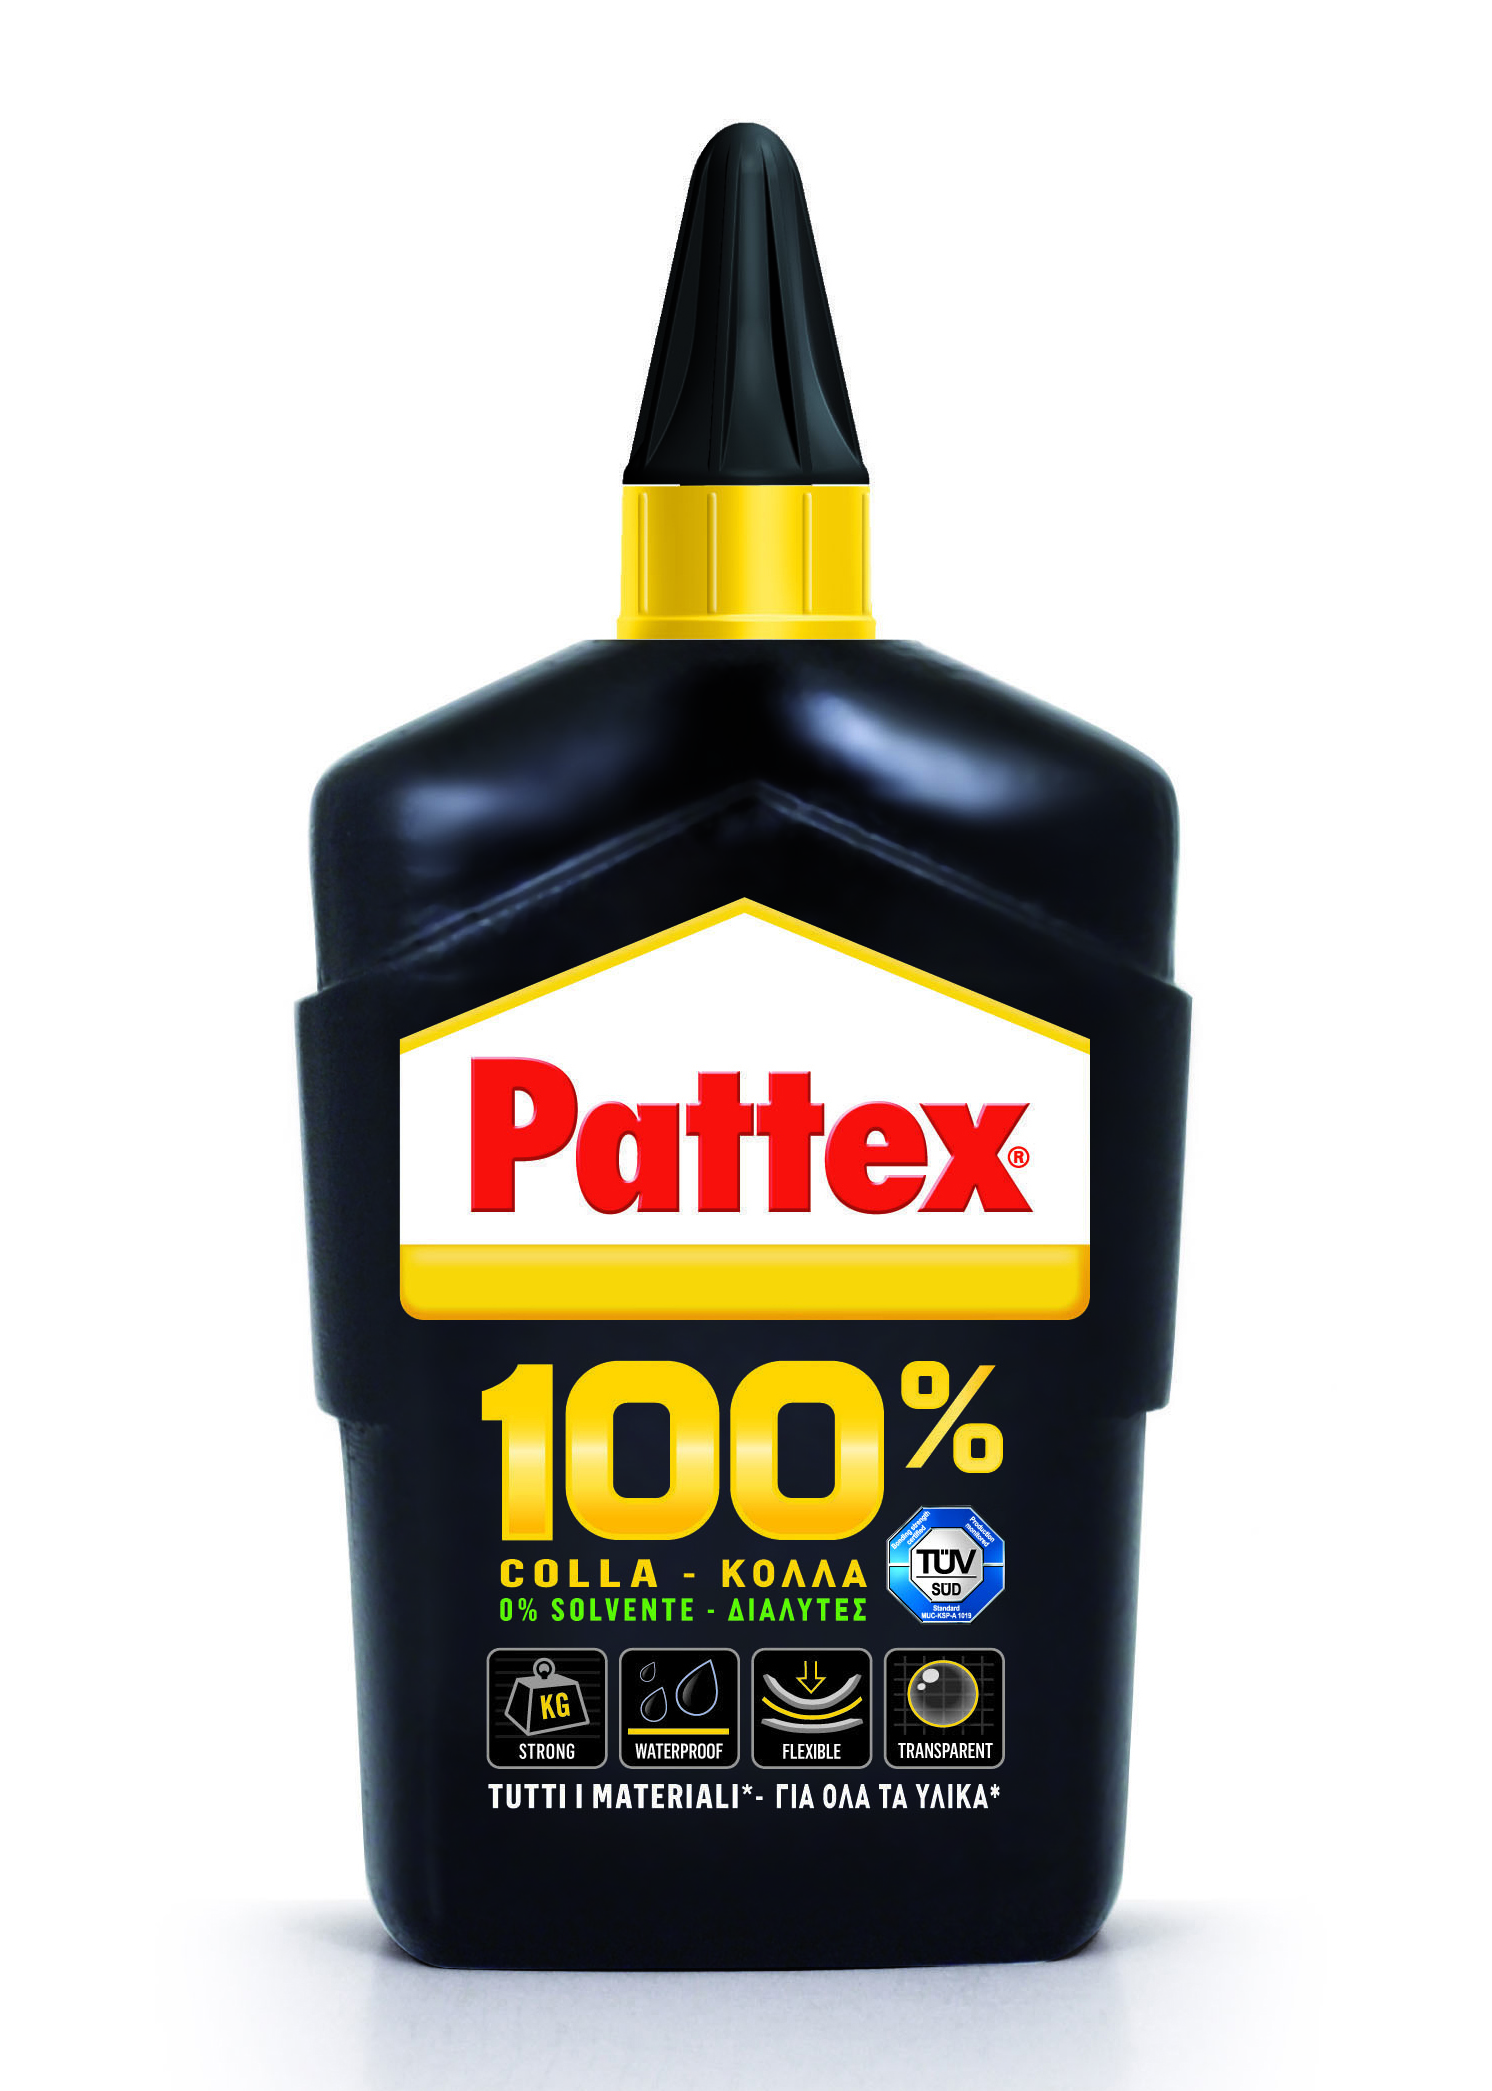 Pattex - 100% colla flextec trasparente 200 g